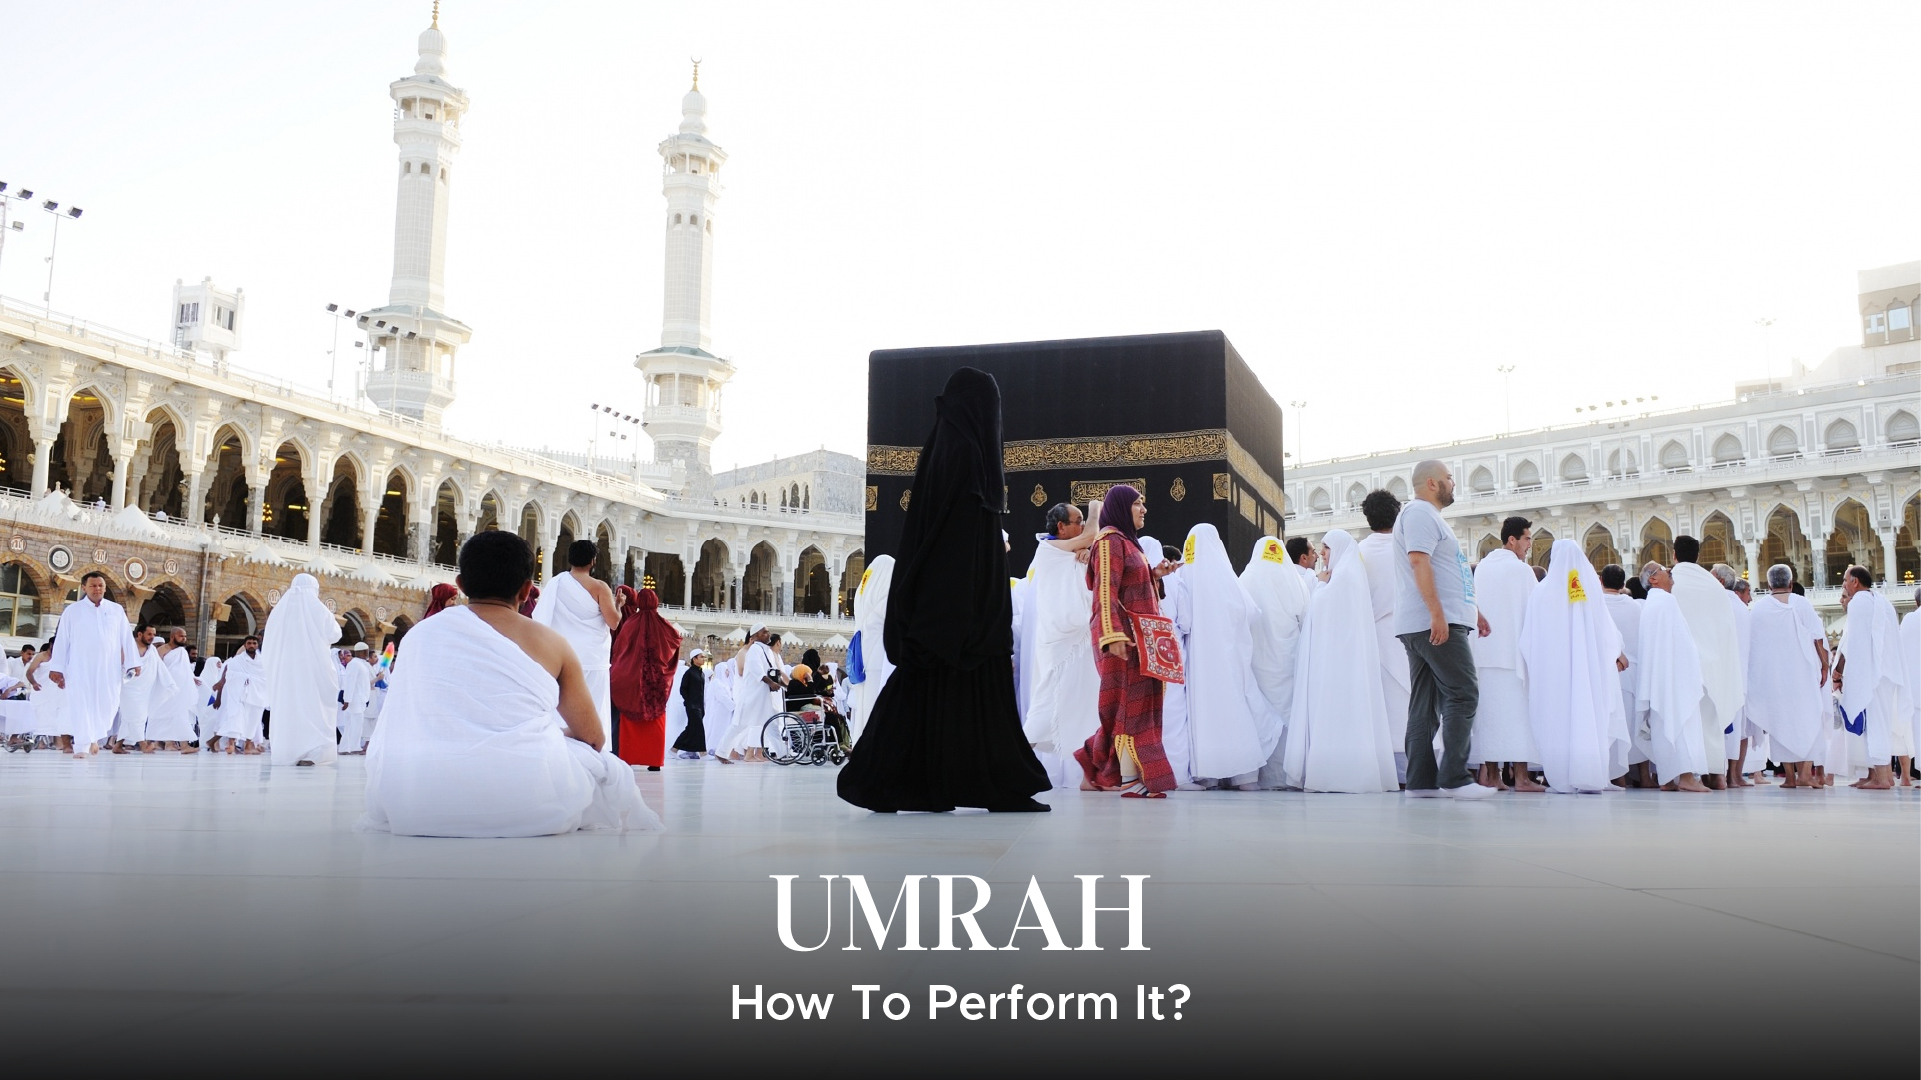 Best way to Perform Umrah